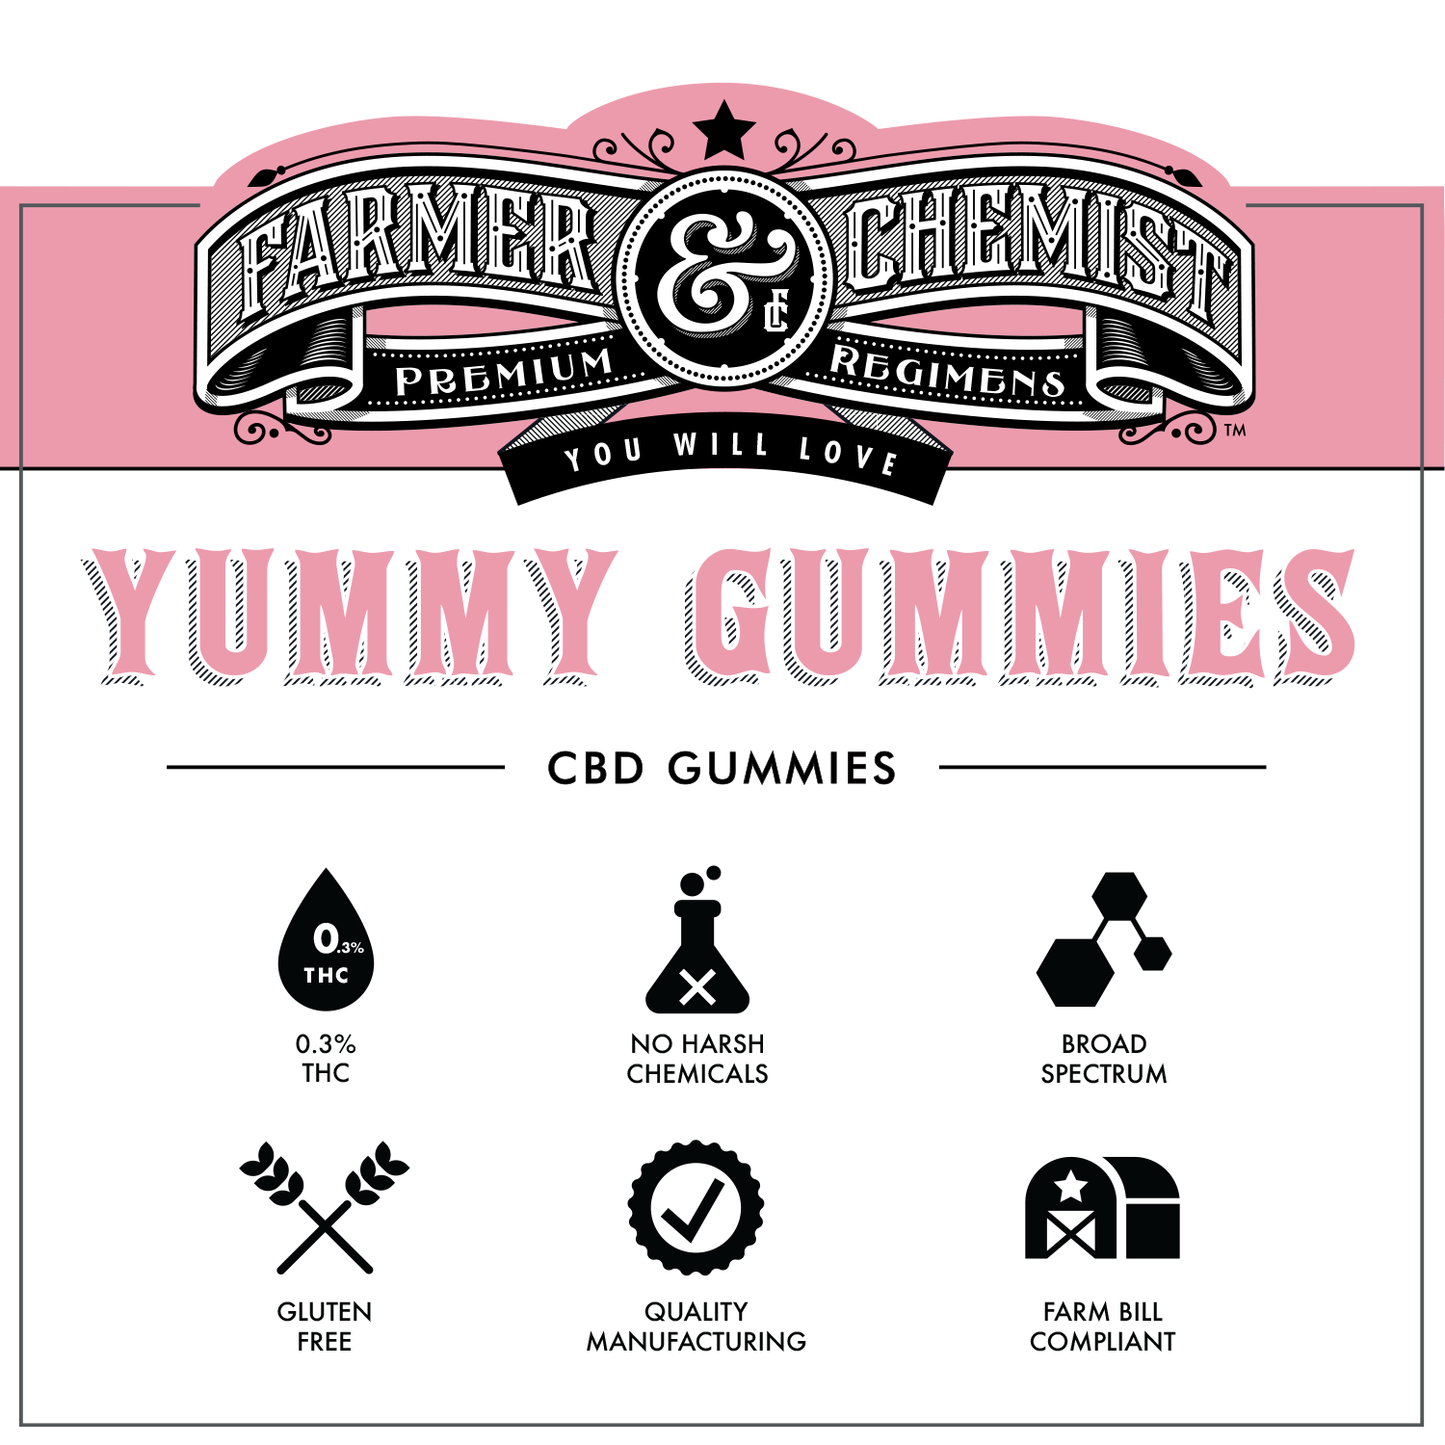 YUMMY GUMMIES - 12ct 28mg CBD/5mg CBG Gummies (Caja de 4)